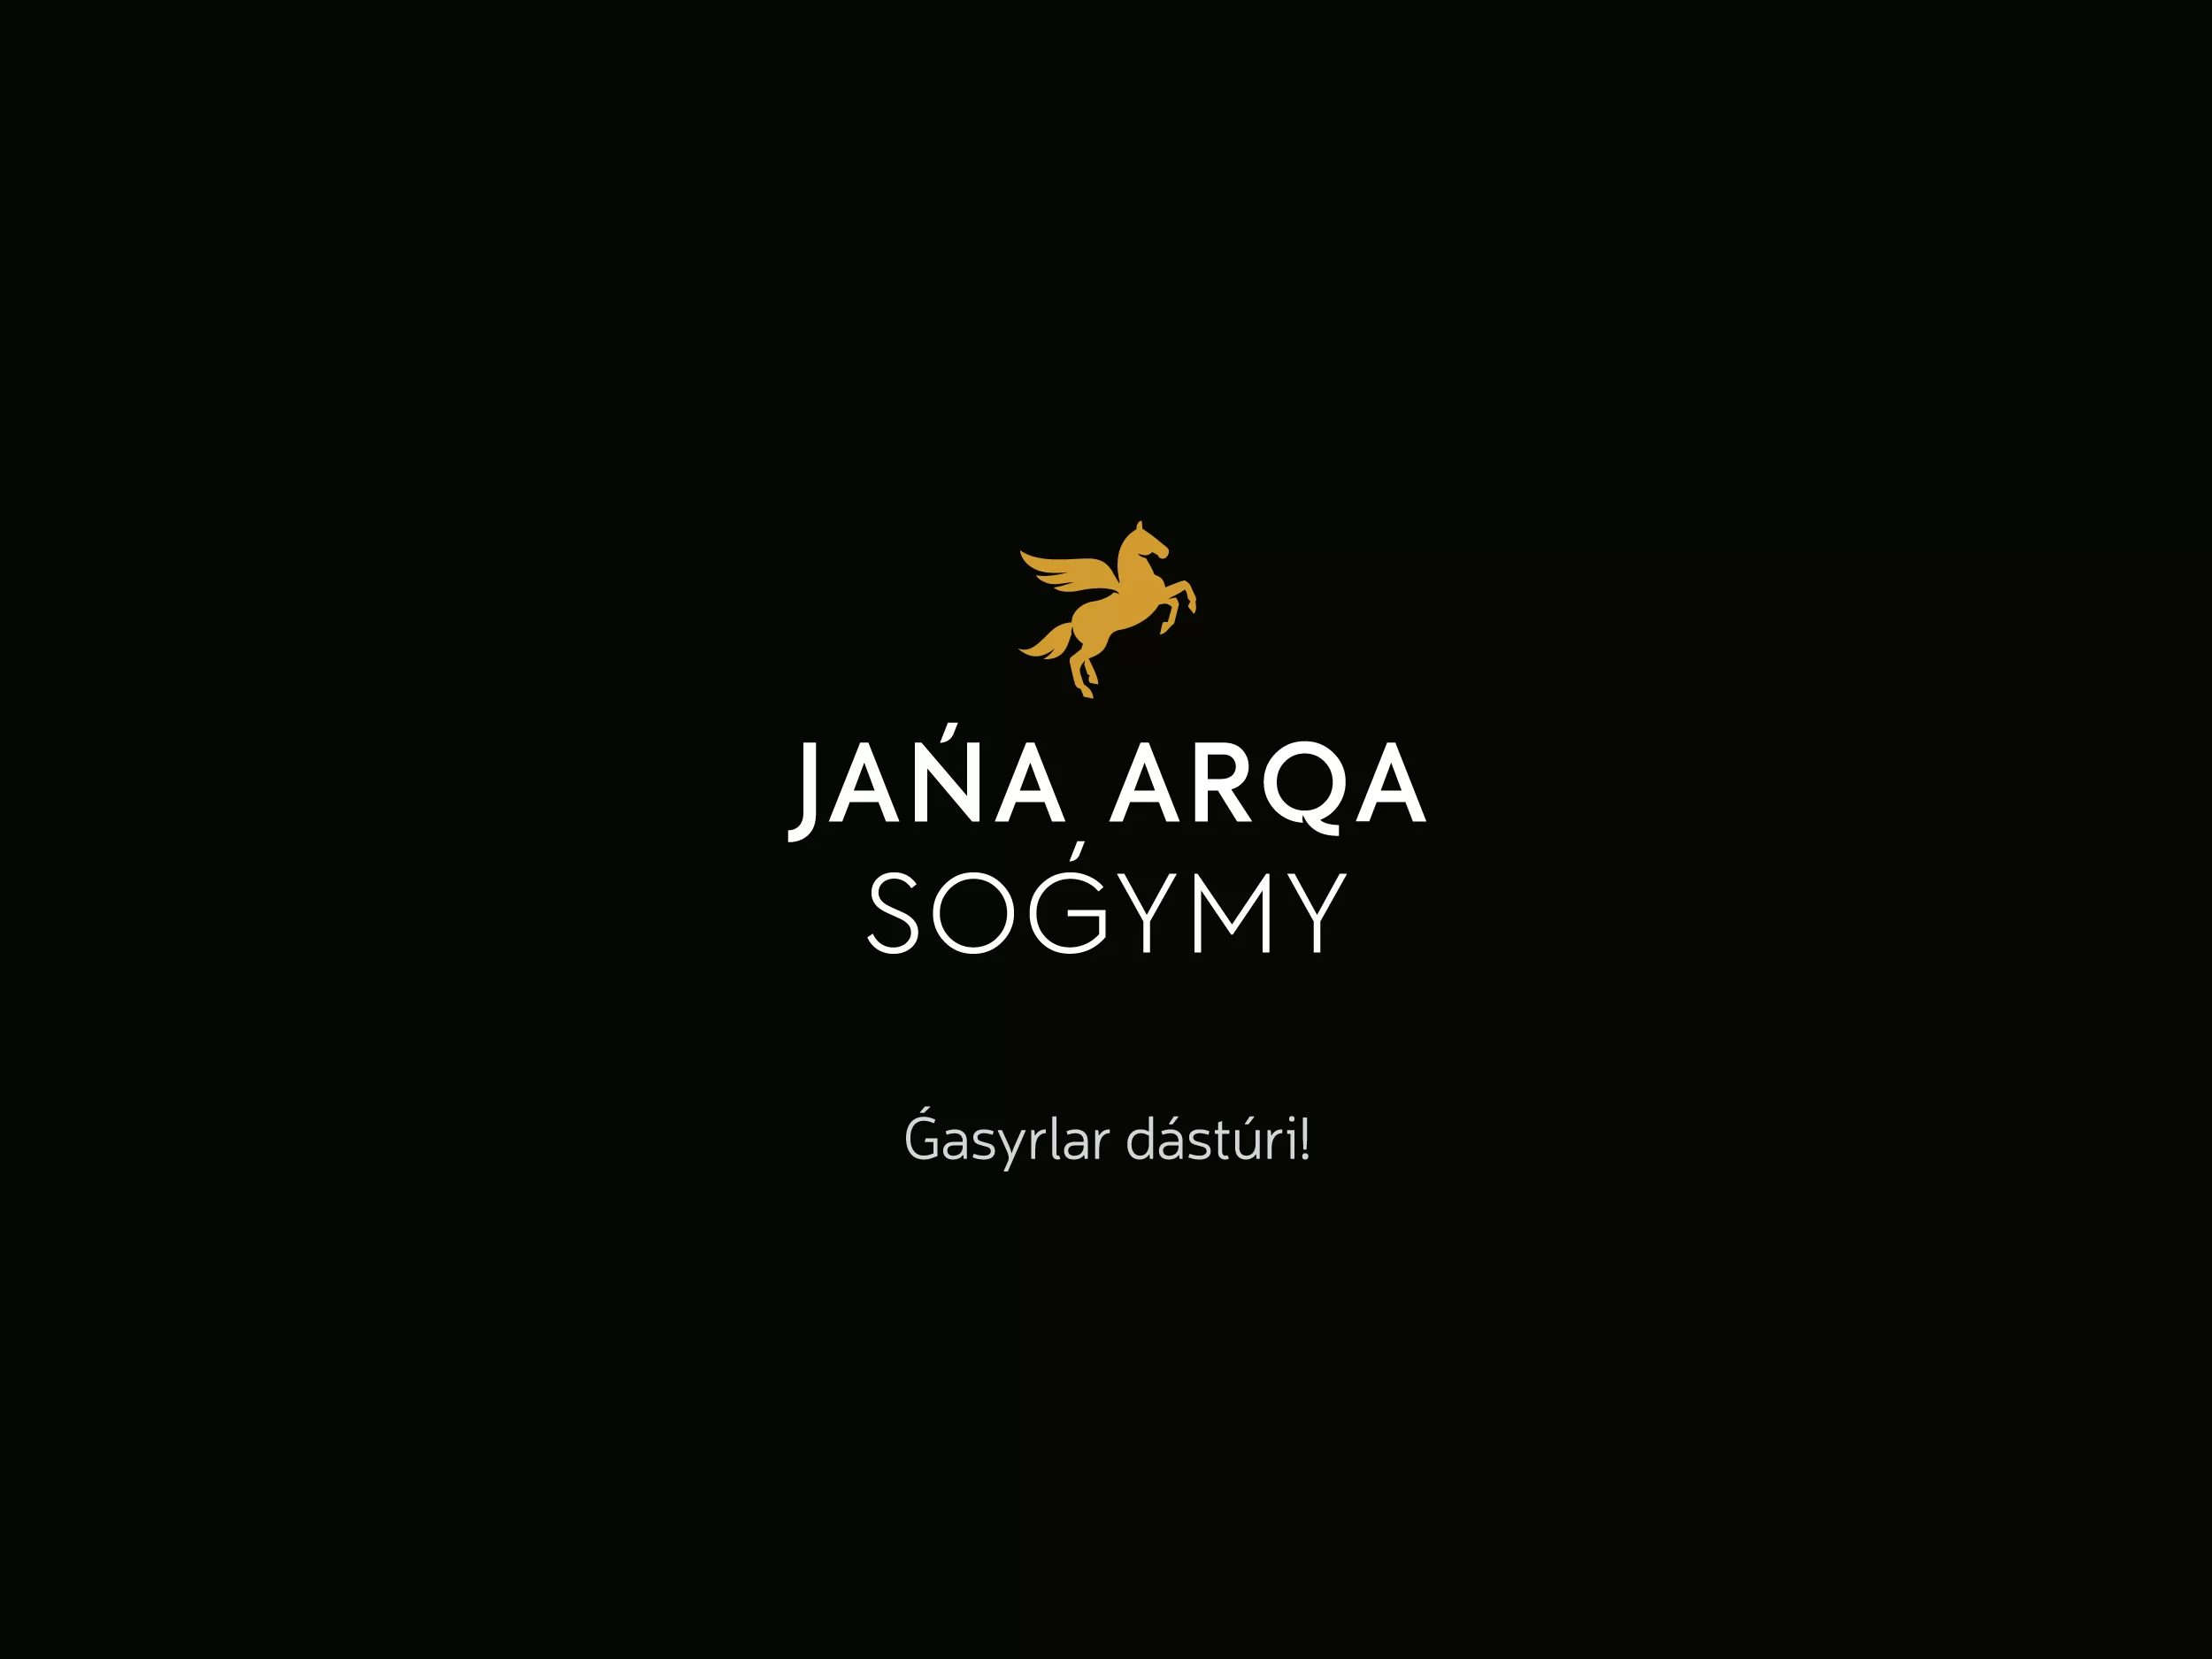 Новый бренд мяса | JANA ARQA SOGYMY